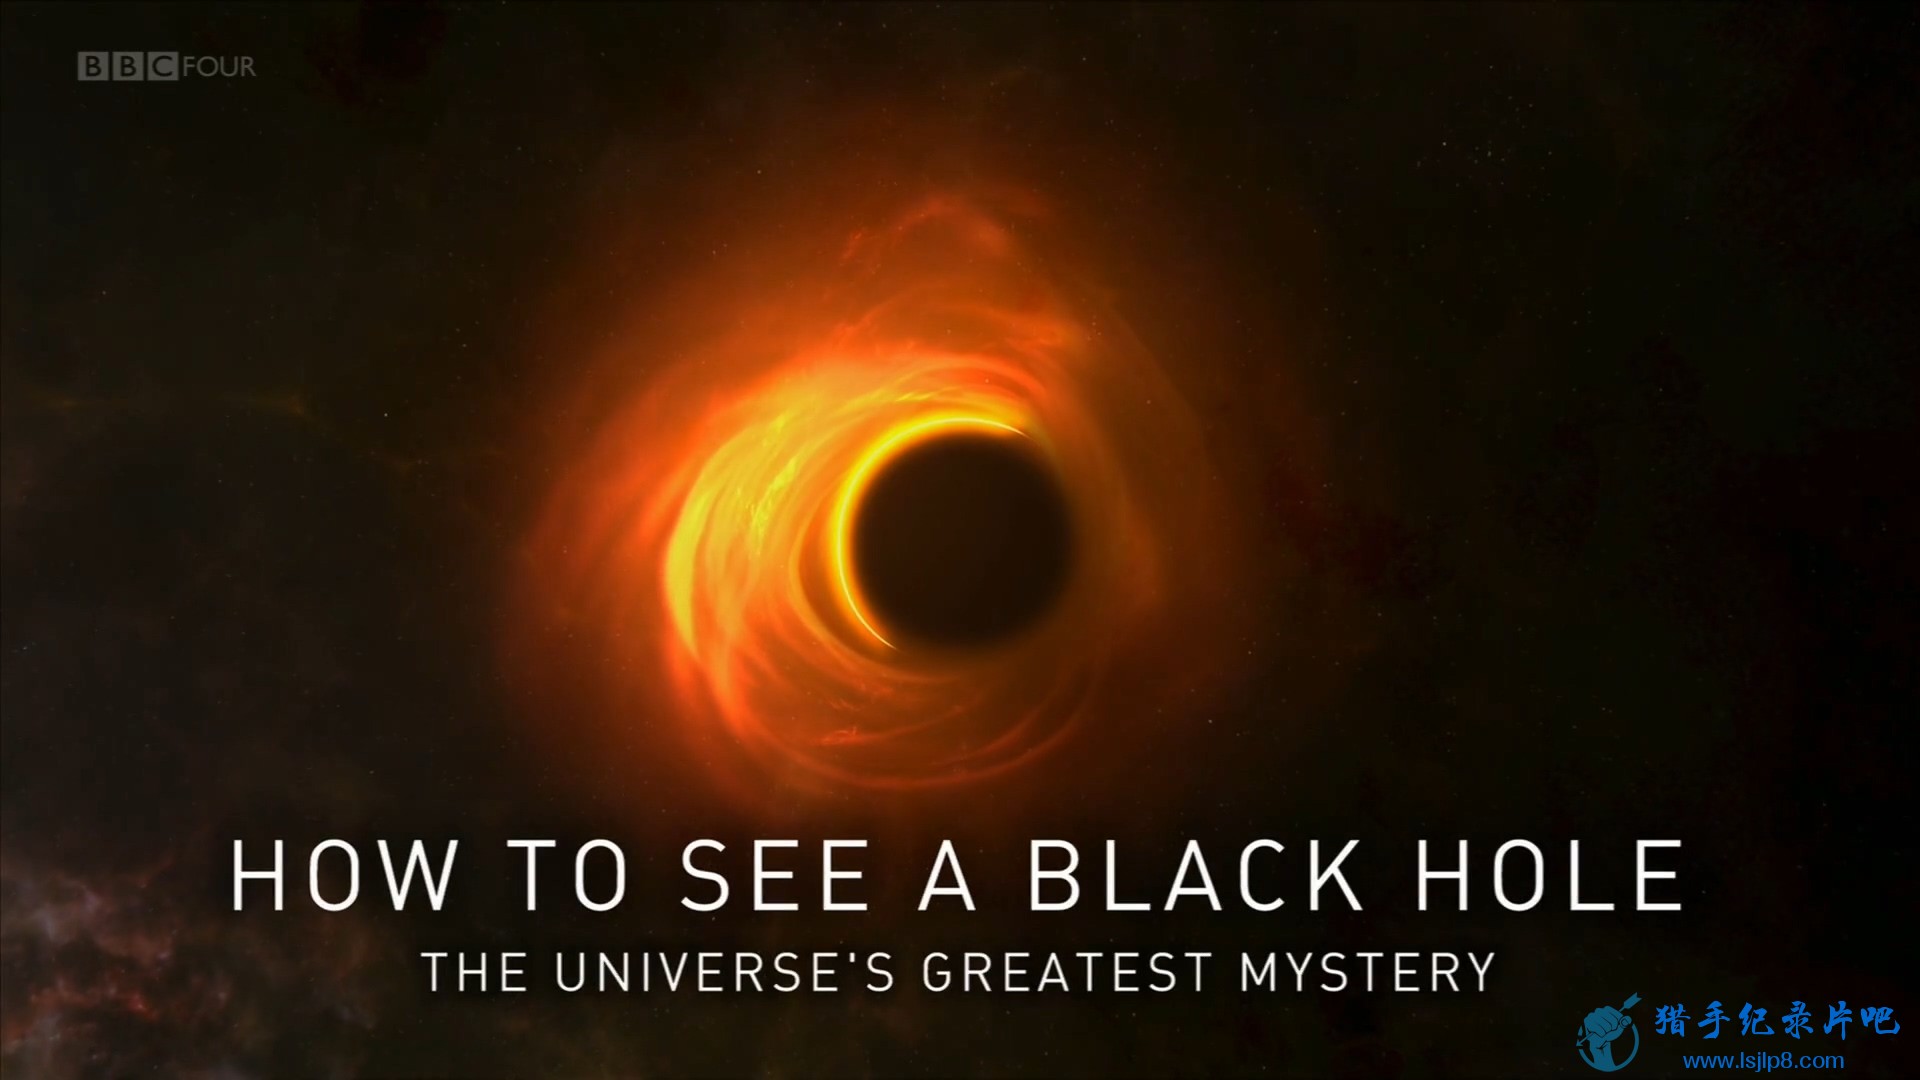 BBC.How.to.See.a.Black.Hole.1080p.HDTV.x264.AAC.MVGroup.org.mkv_20200513_112234.721.jpg